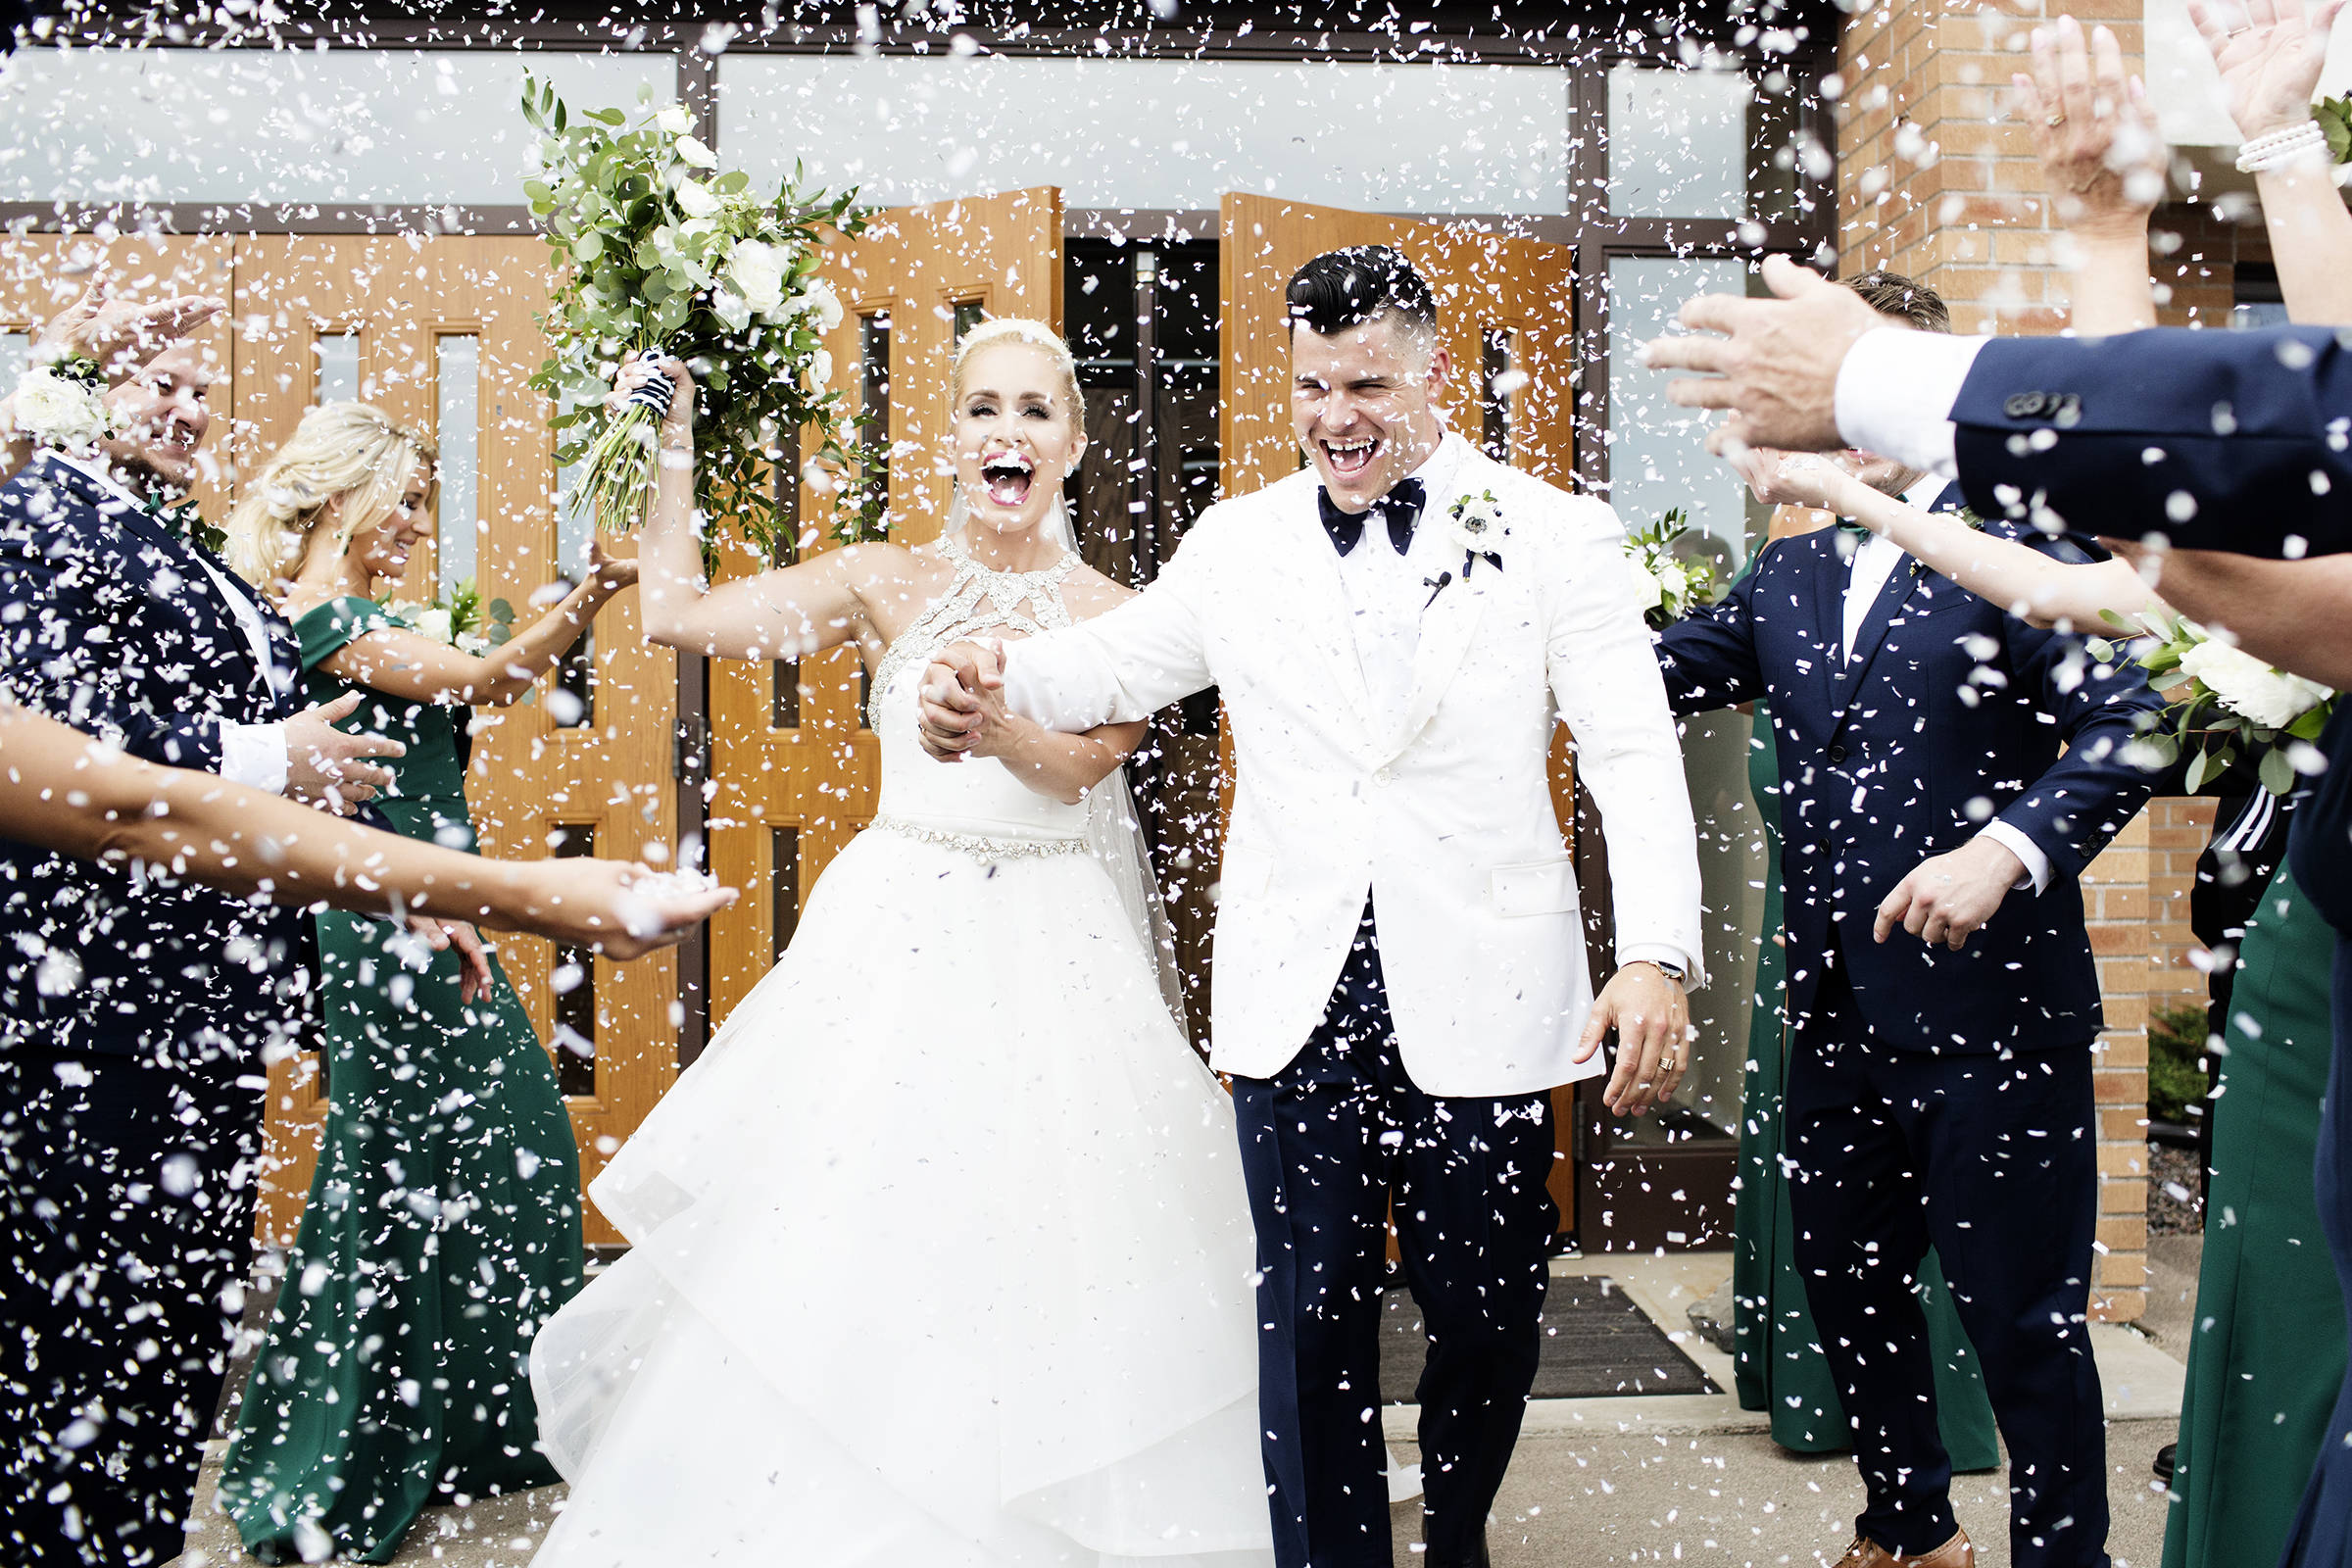 Favorite wedding moments of 2018 | Photography by Photogen Inc. | Eliesa Johnson | Based in Minneapolis, Minnesota